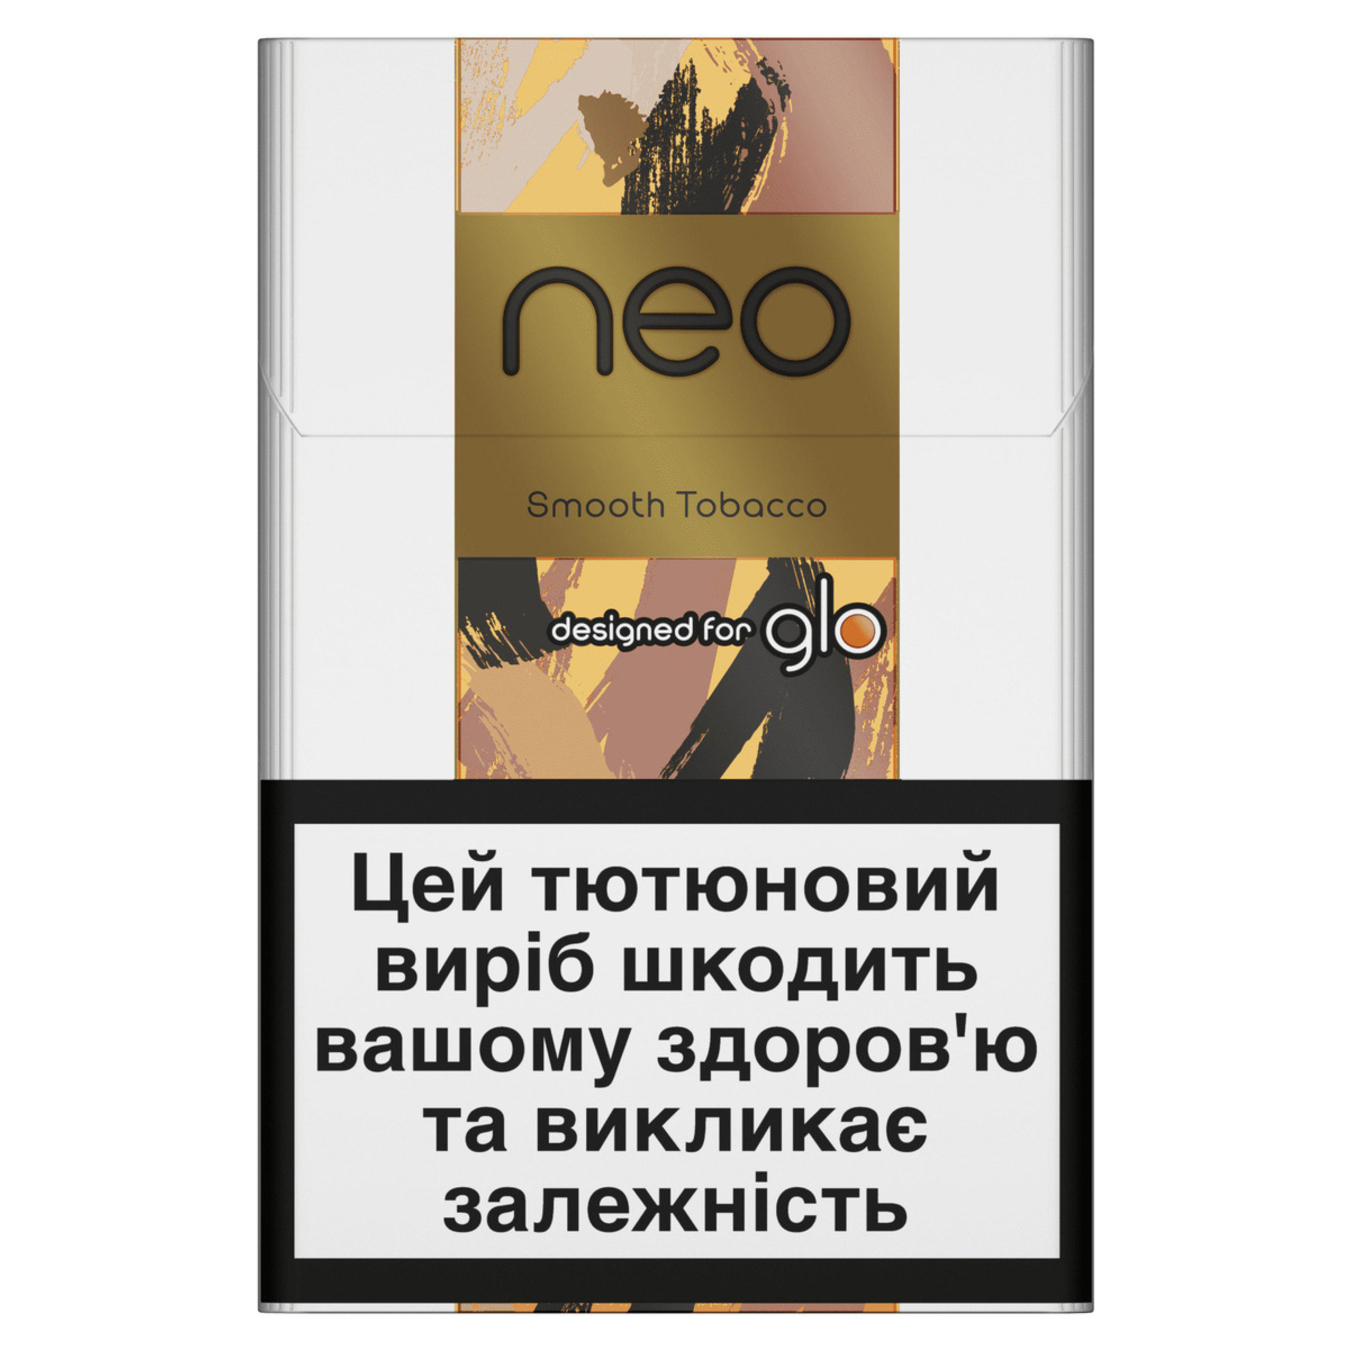 Neo rich switch tobacco 20 sticks designed for glo